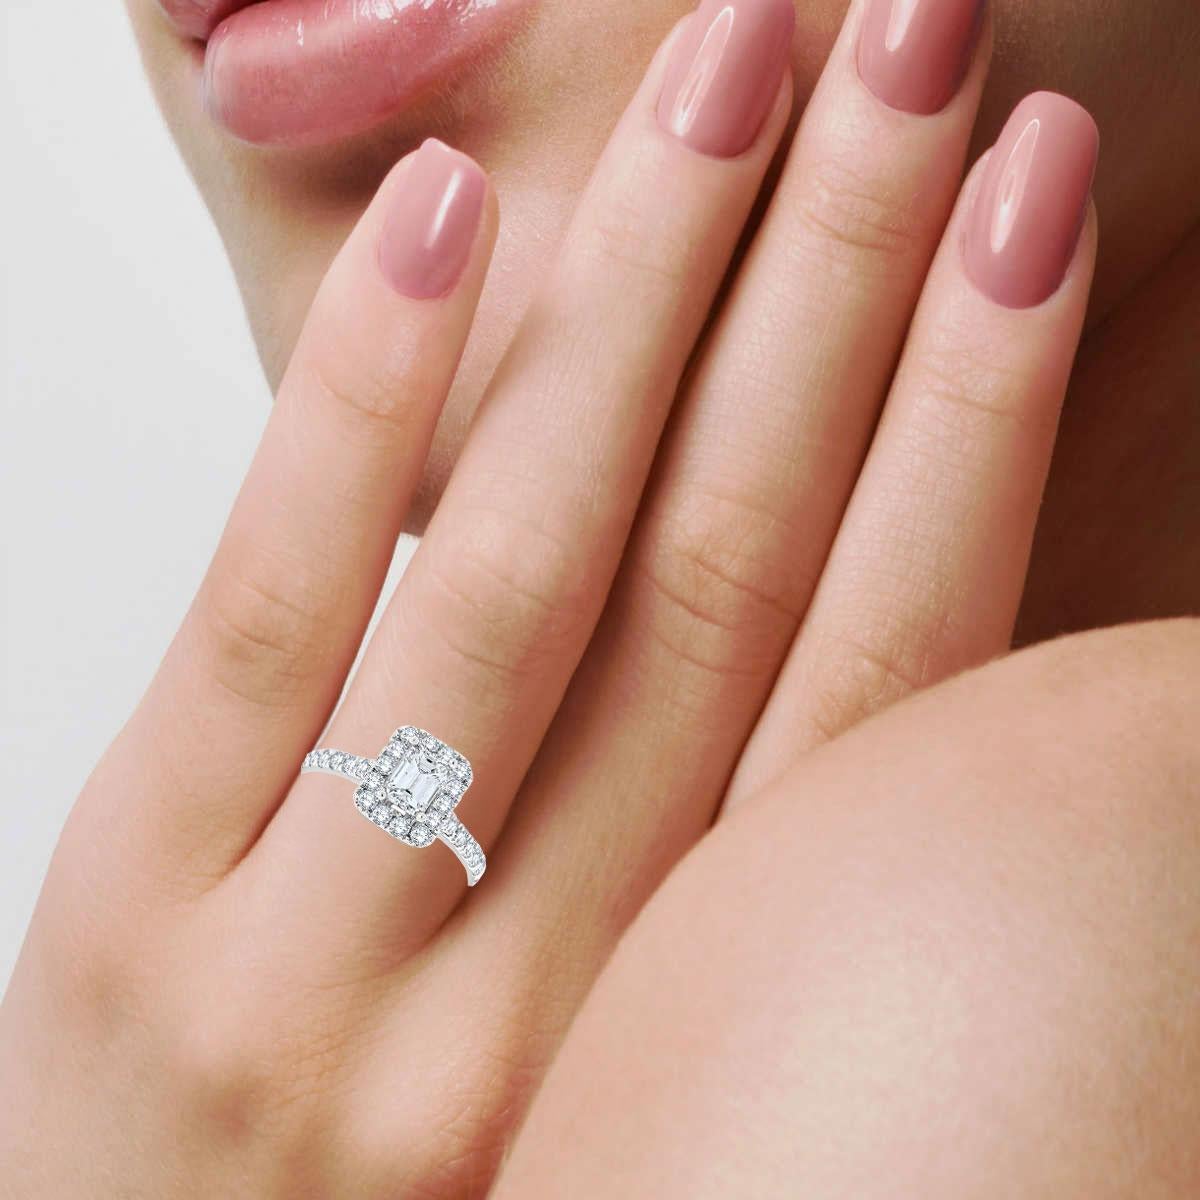 Women's 14K White Gold Halo Style Emerald Shape Diamond Ring, Center -0.96 Carat GIA